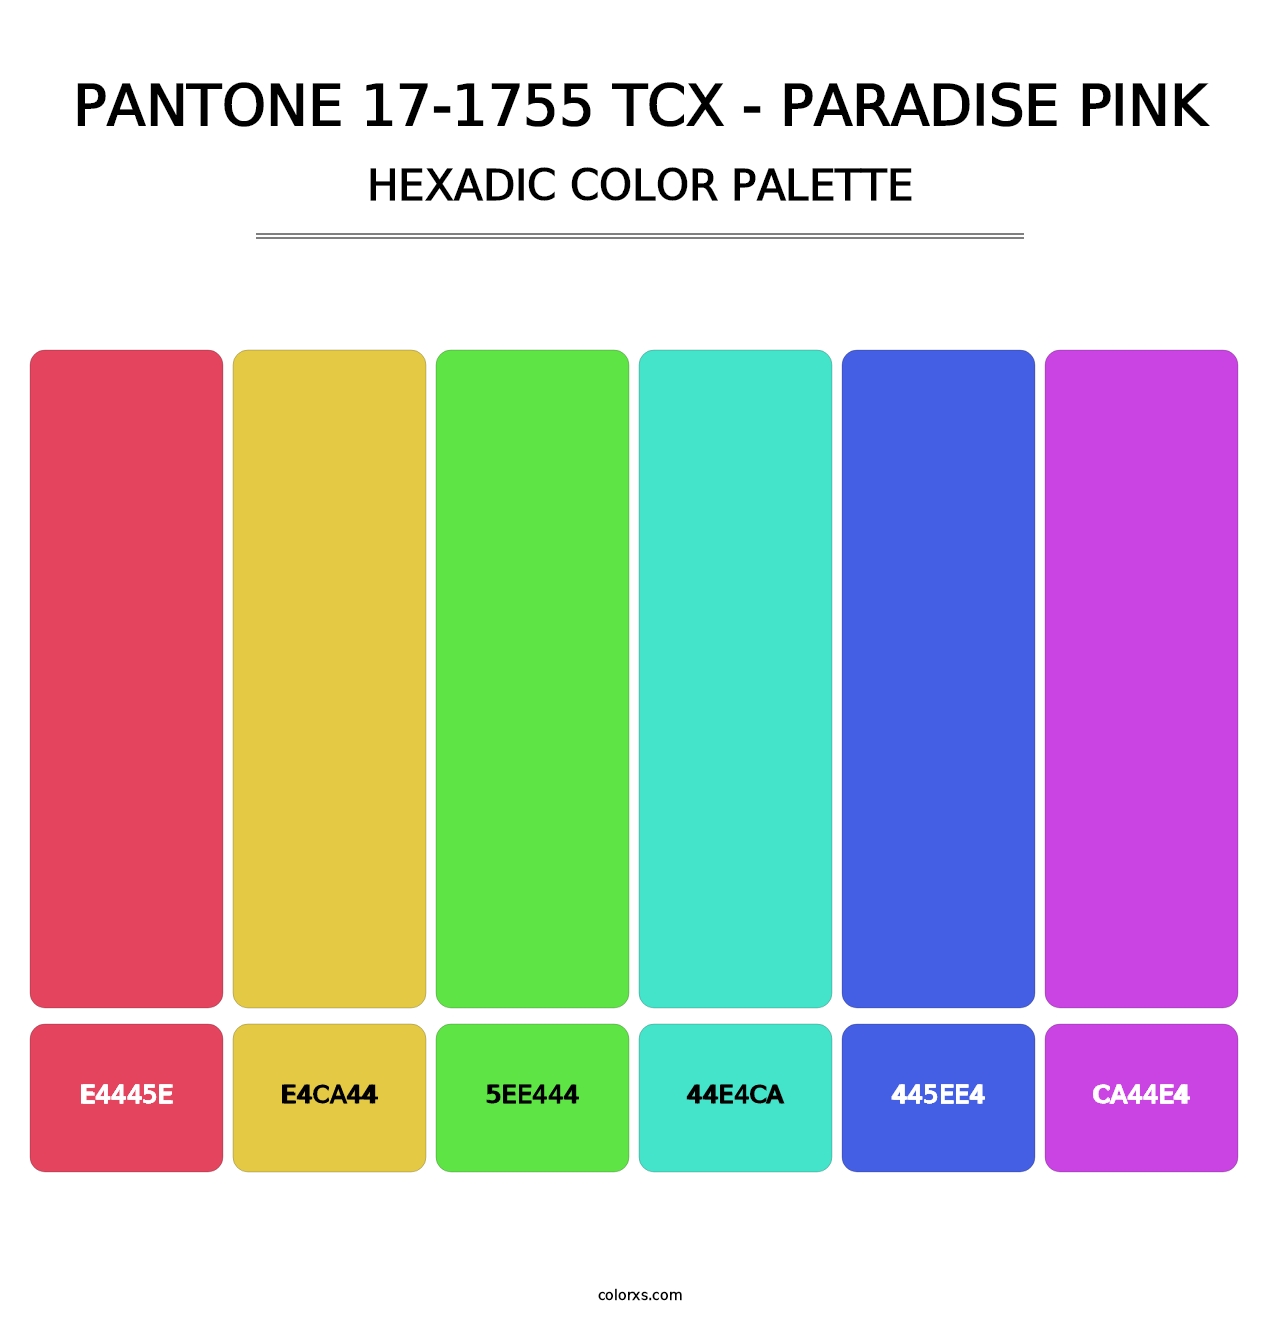 PANTONE 17-1755 TCX - Paradise Pink - Hexadic Color Palette